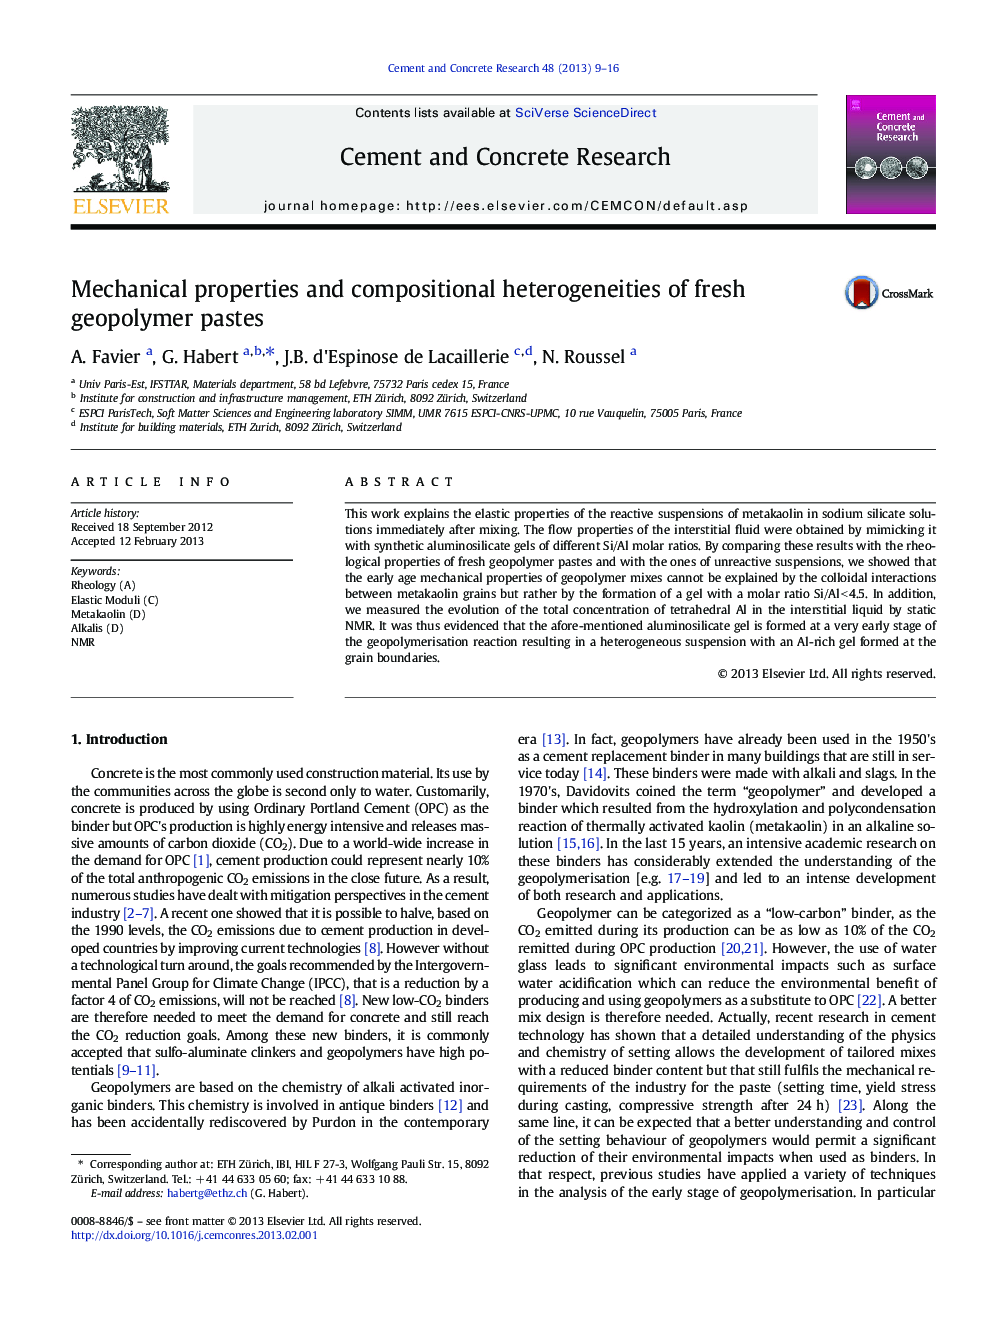 Mechanical properties and compositional heterogeneities of fresh geopolymer pastes